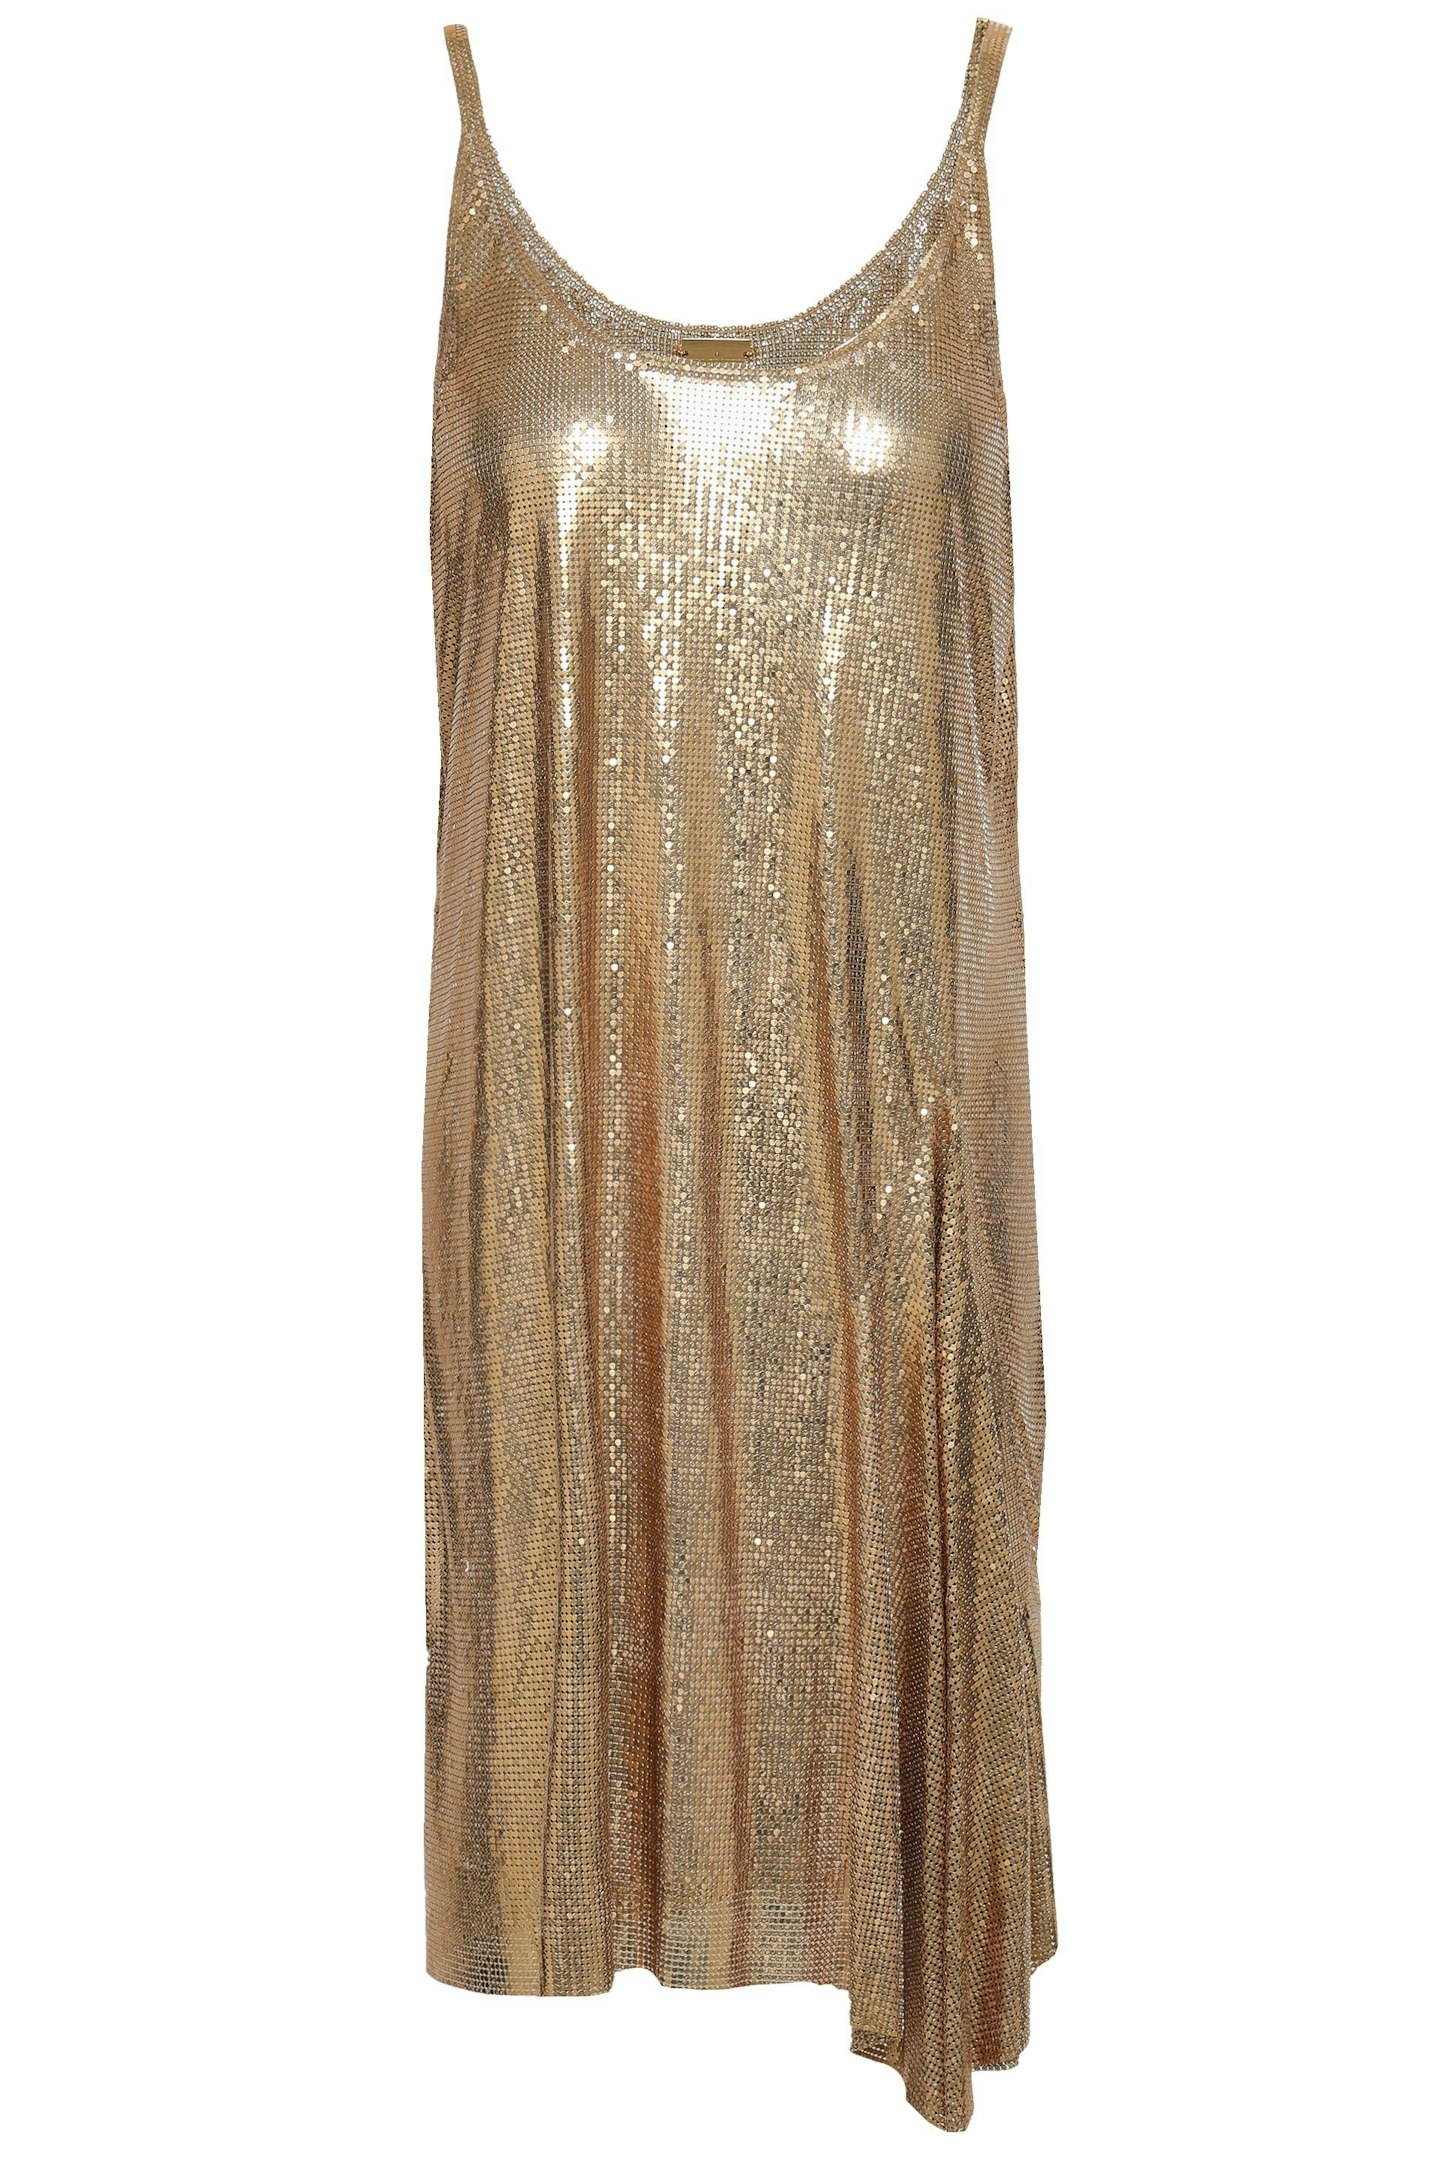 Paco Rabanne, Gold Sequin Dress, £1,995